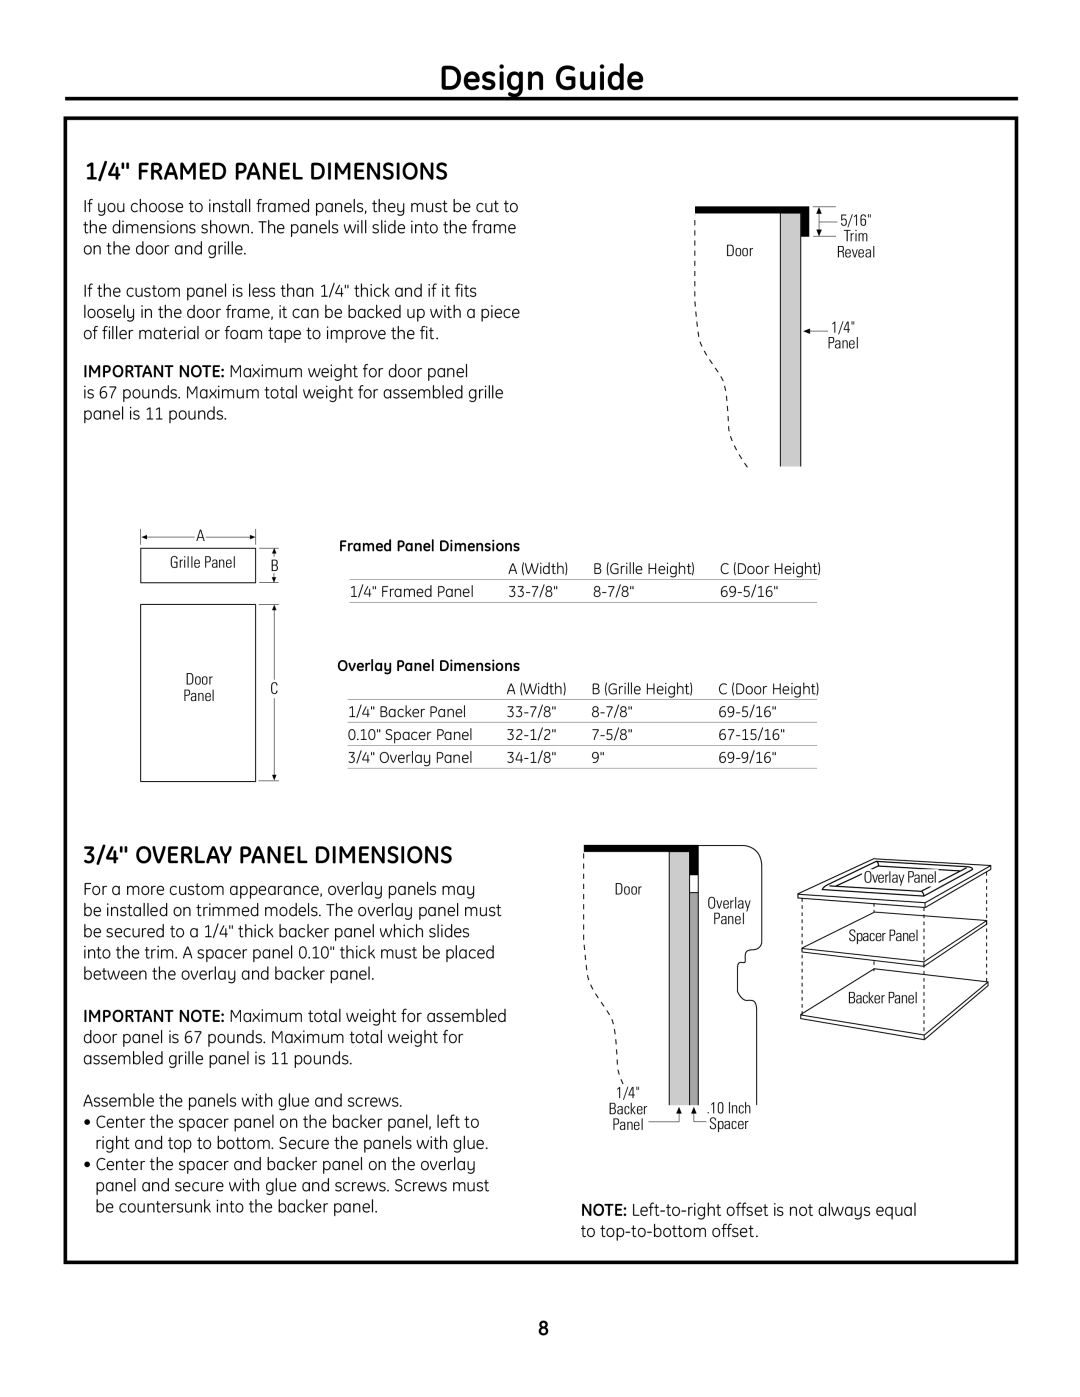 GE Monogram Built-In All-Refrigerator/Freezer 1/4 FRAMED PANEL DIMENSIONS, 3/4 OVERLAY PANEL DIMENSIONS, Design Guide 